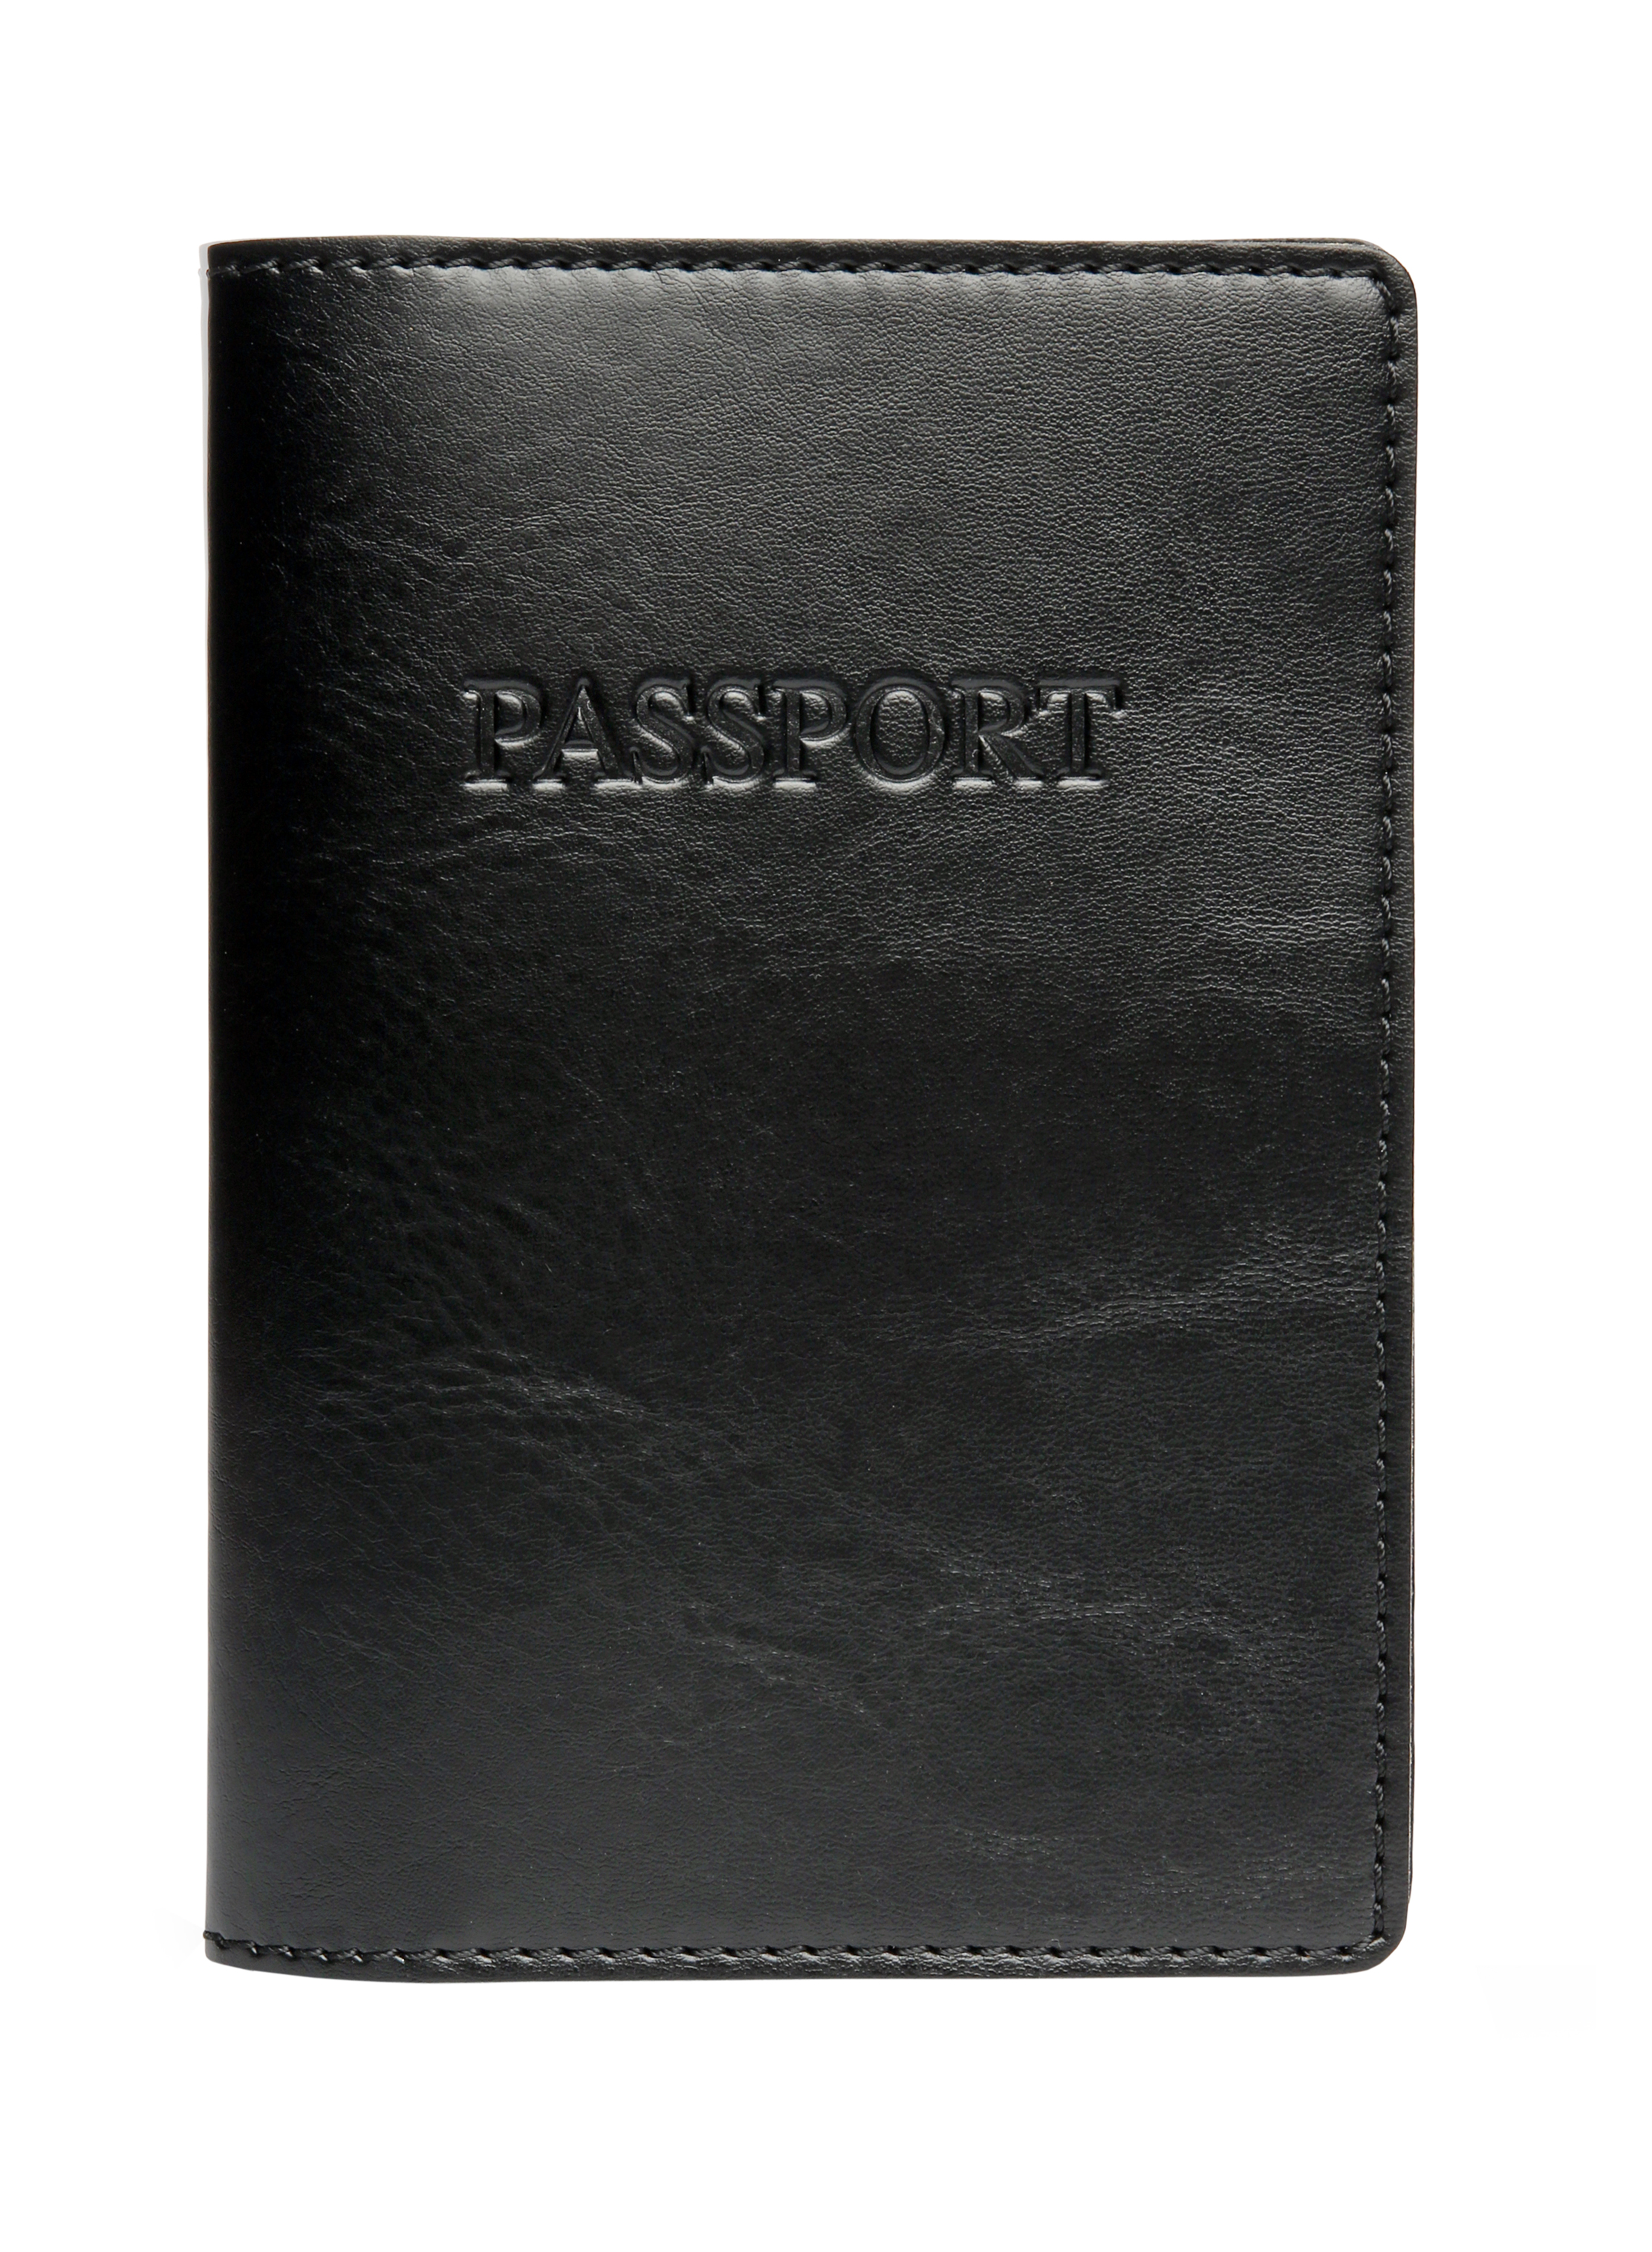 A4111-B - Bi-Color Passport Cover